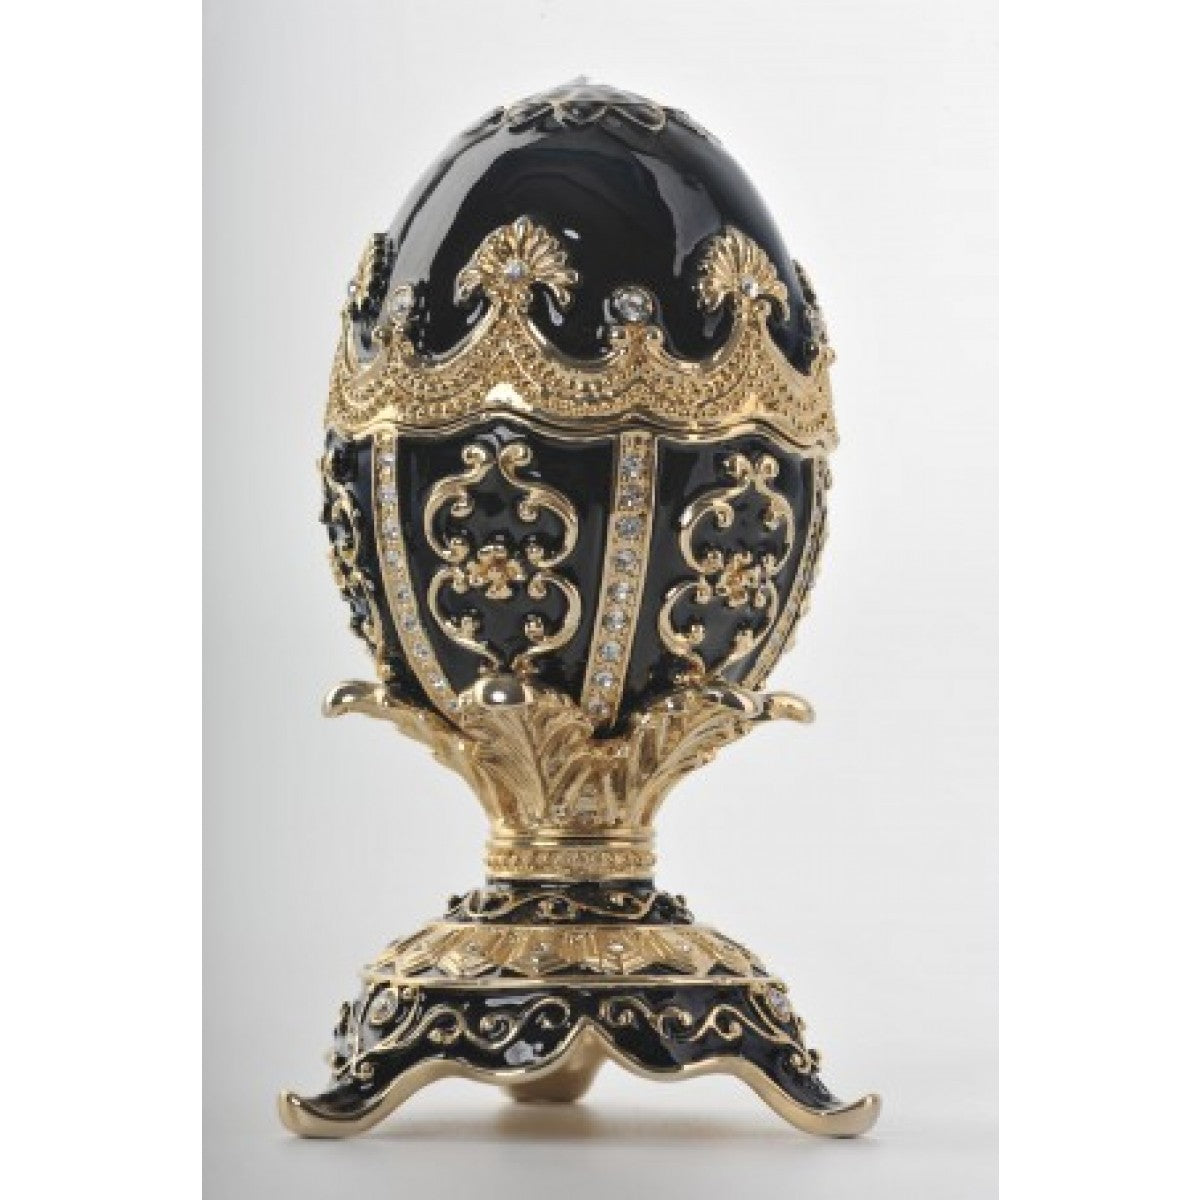 Black Faberge Egg with a Chicken Inside by Keren Kopal